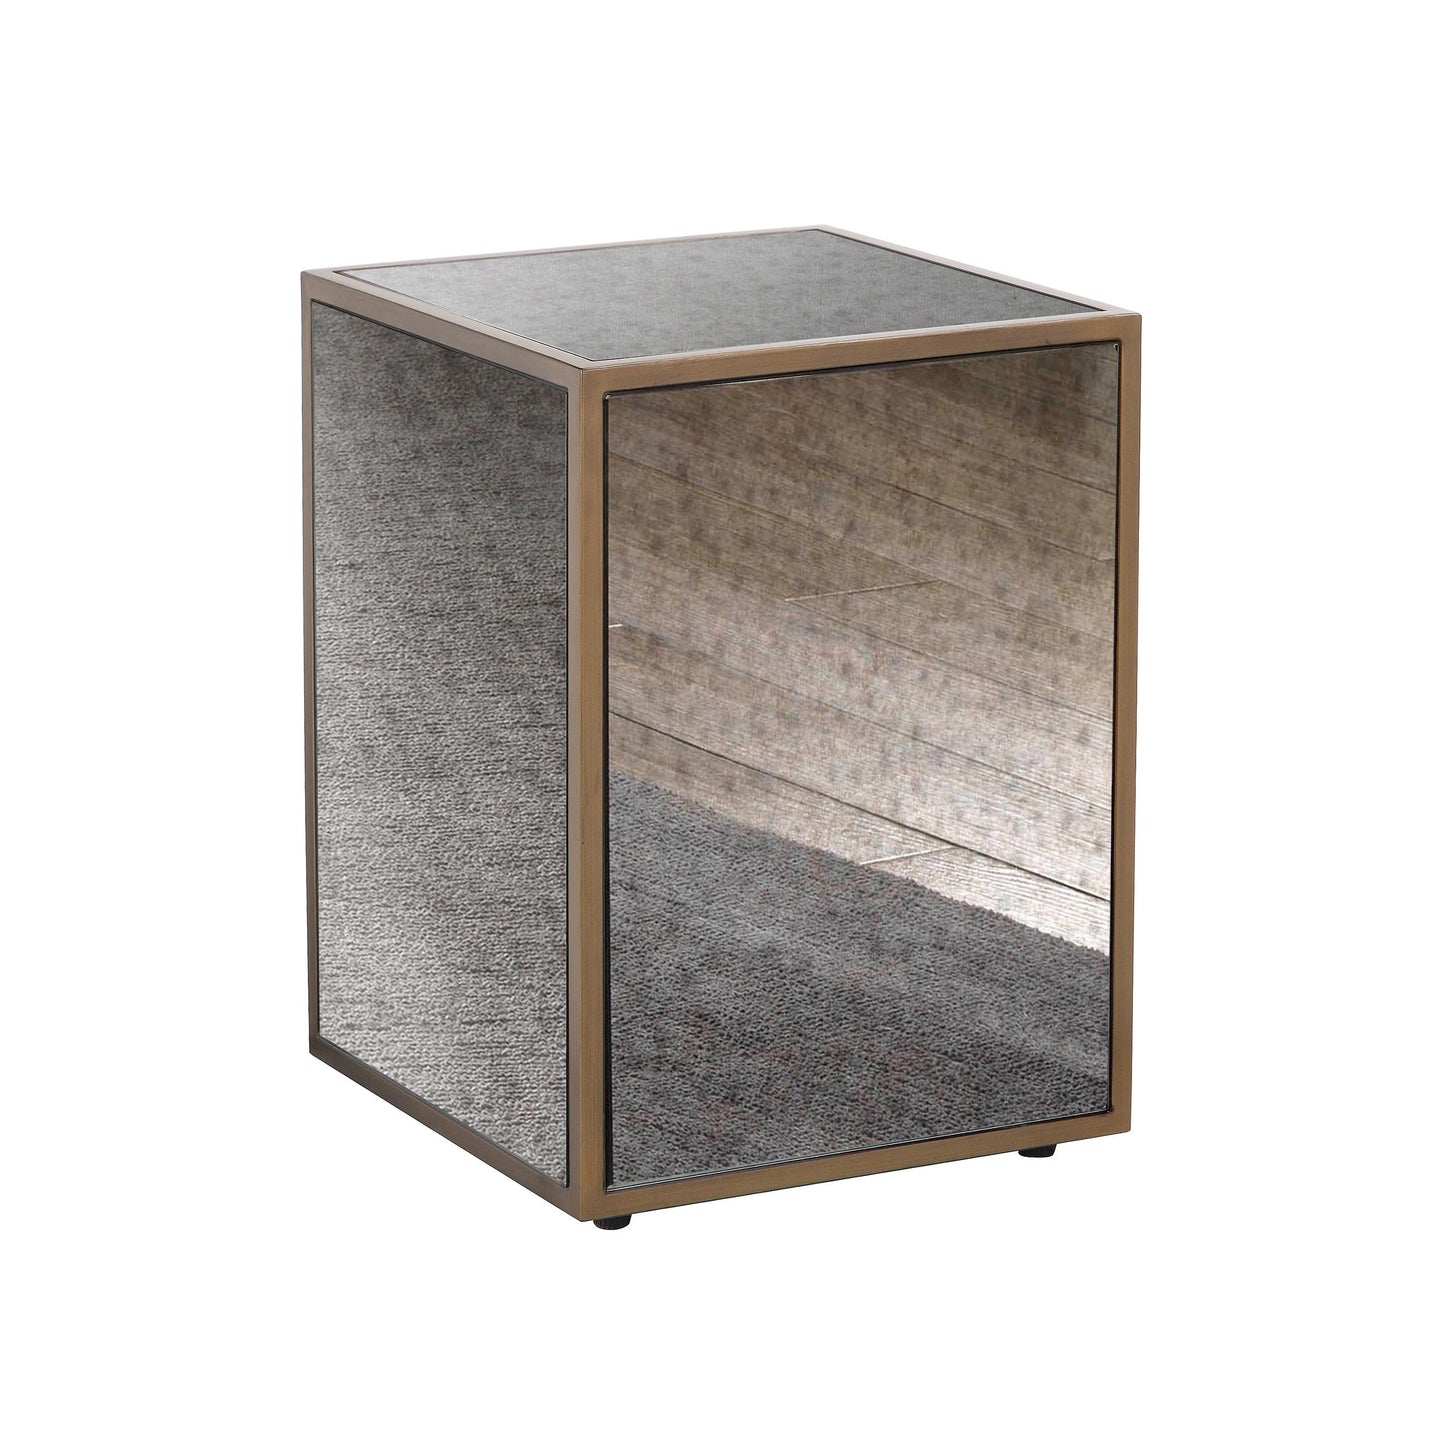 Tov Furniture Lana Mirrored Side Table